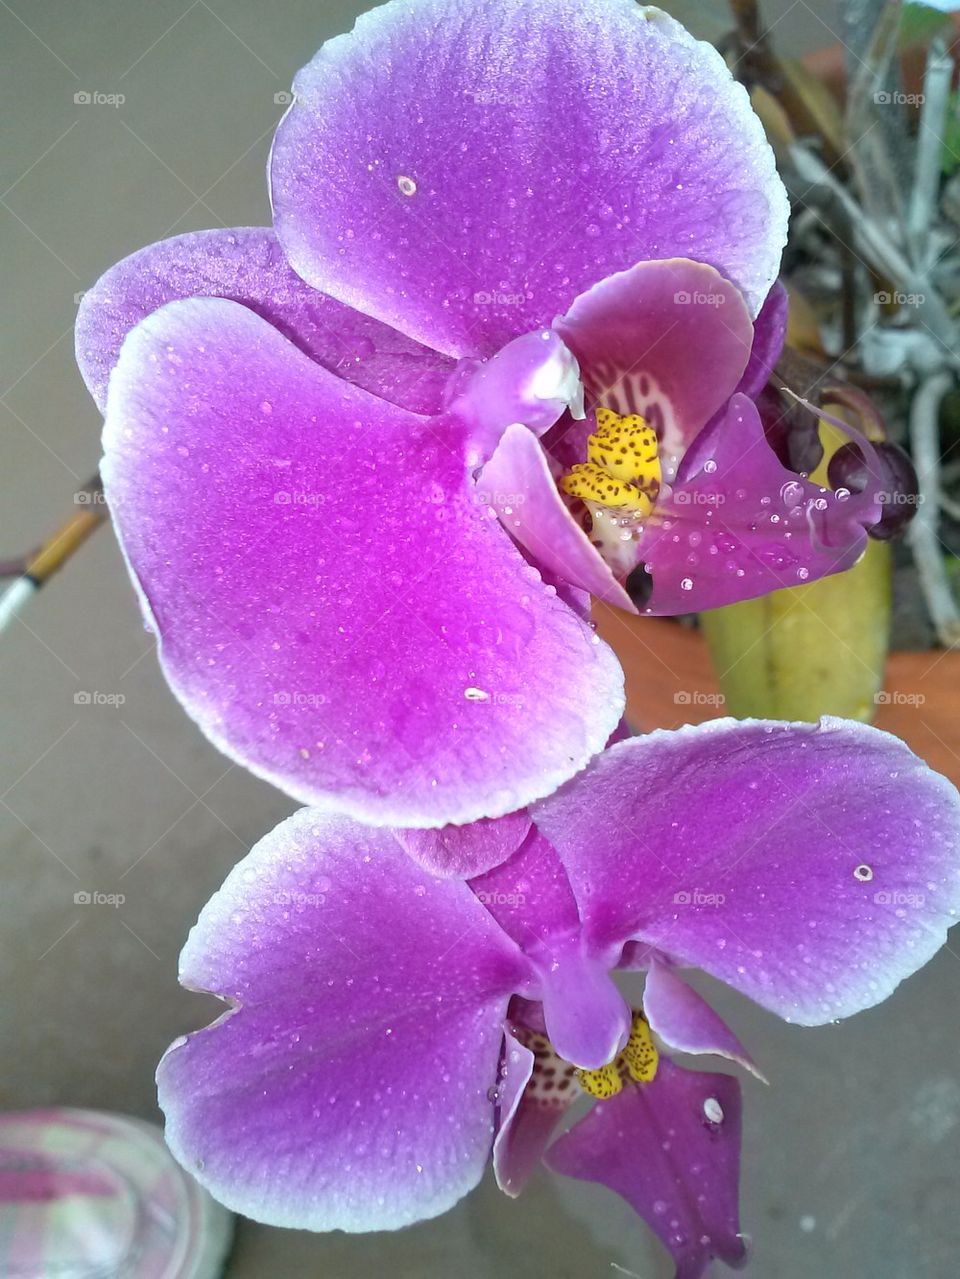 purple orchid